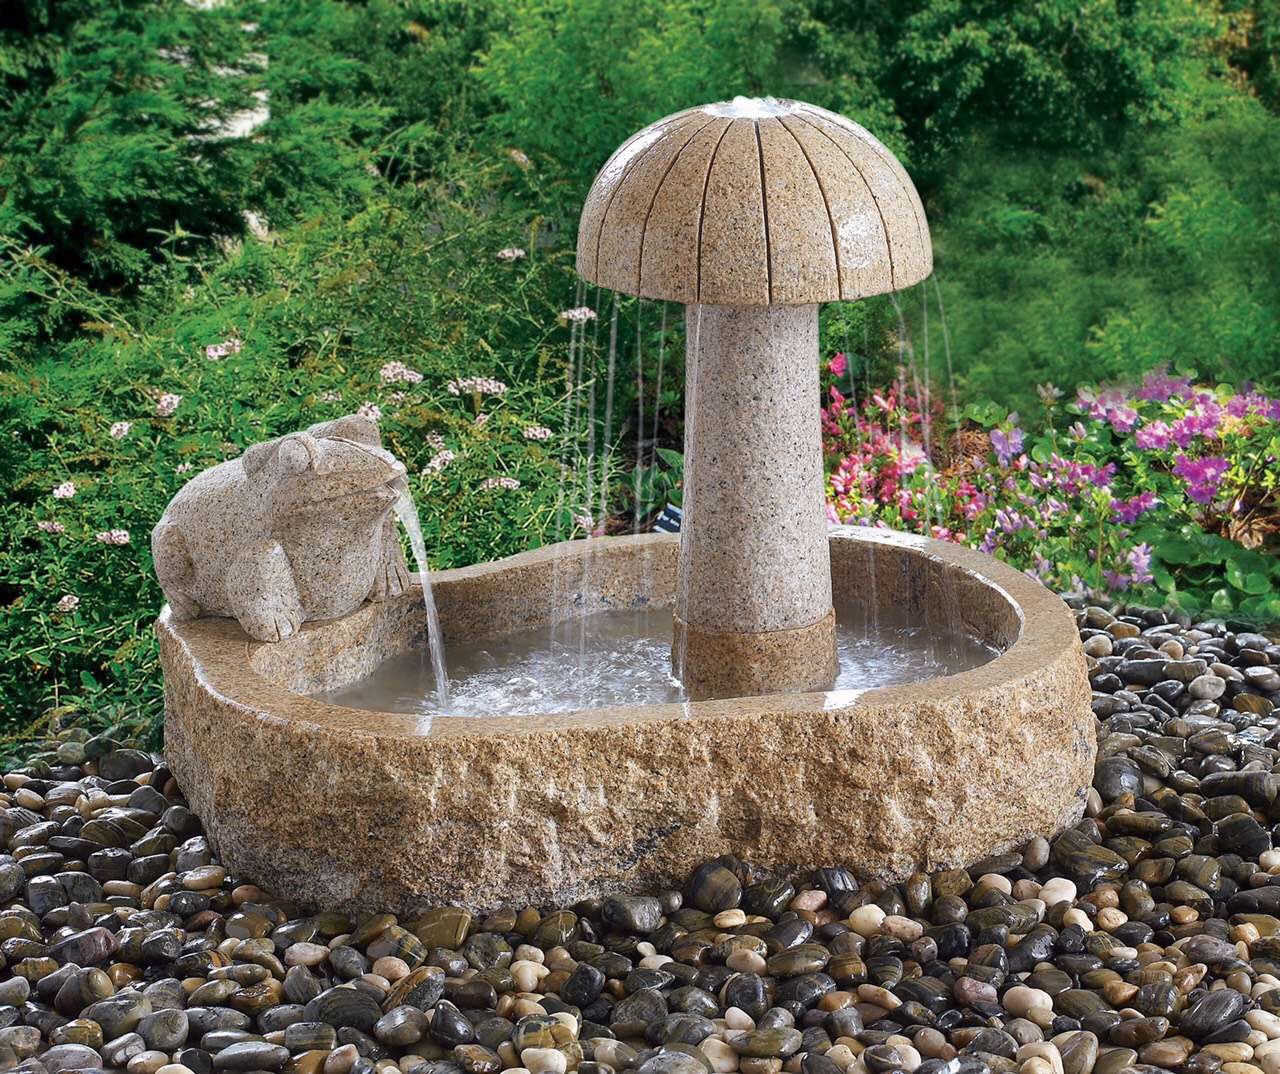 Carved Mushroom Stone Water Fountain Indoor